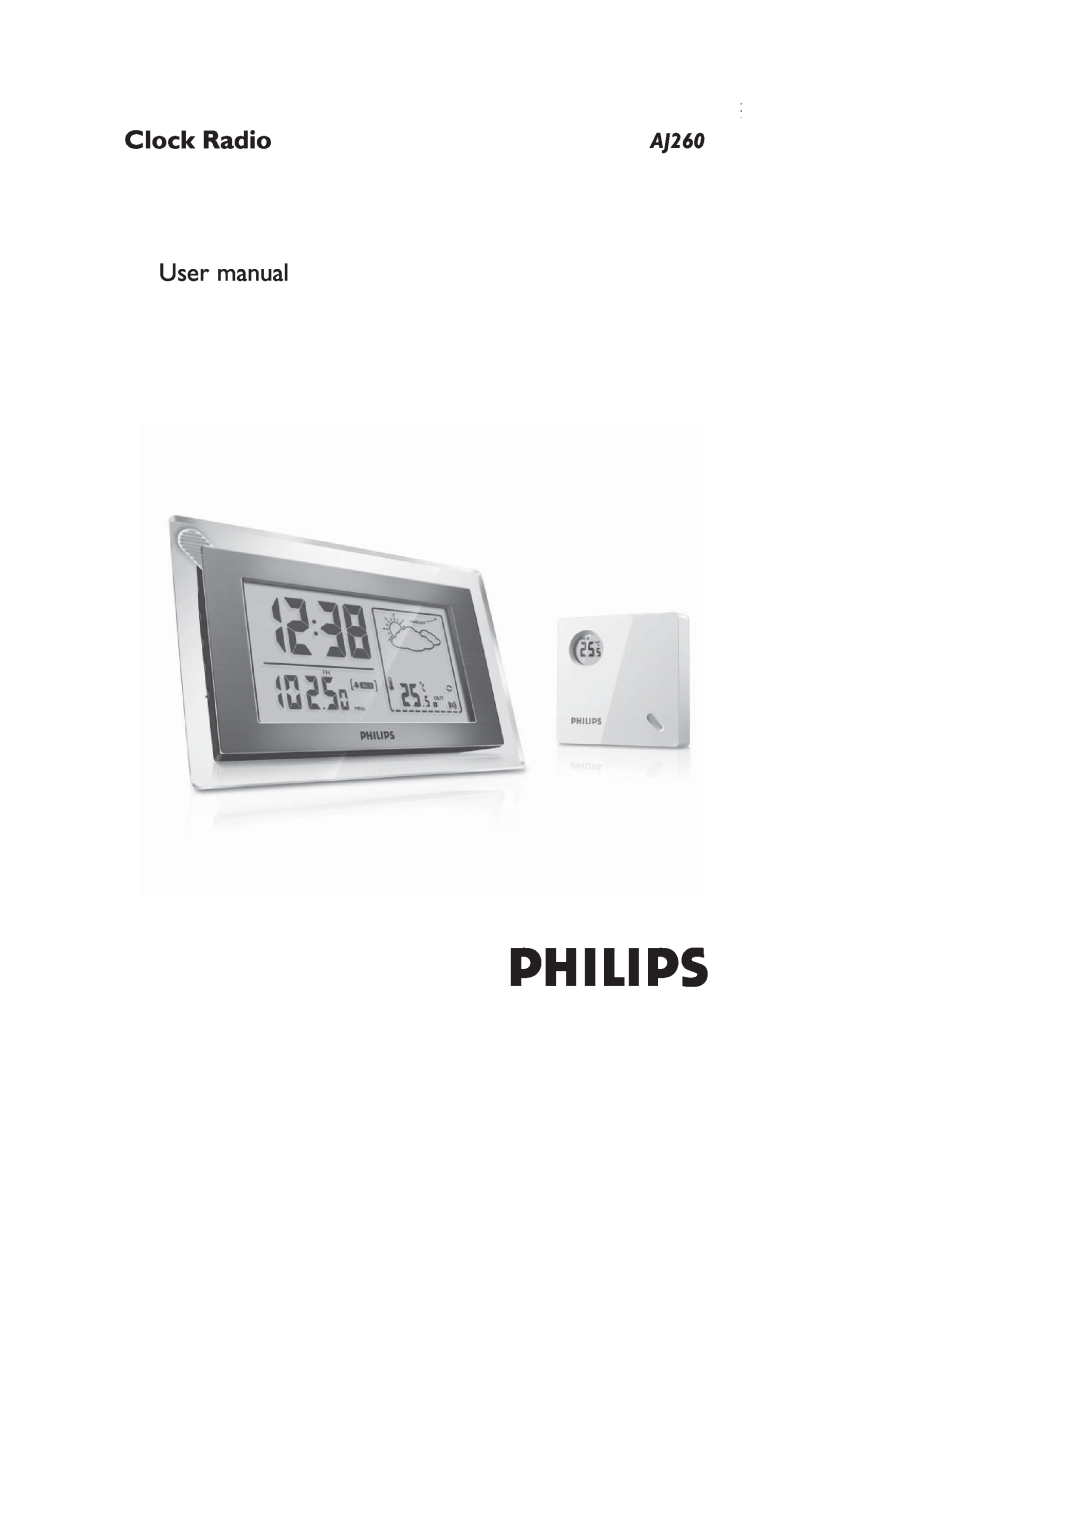 Philips AJ260 user manual Clock Radio 